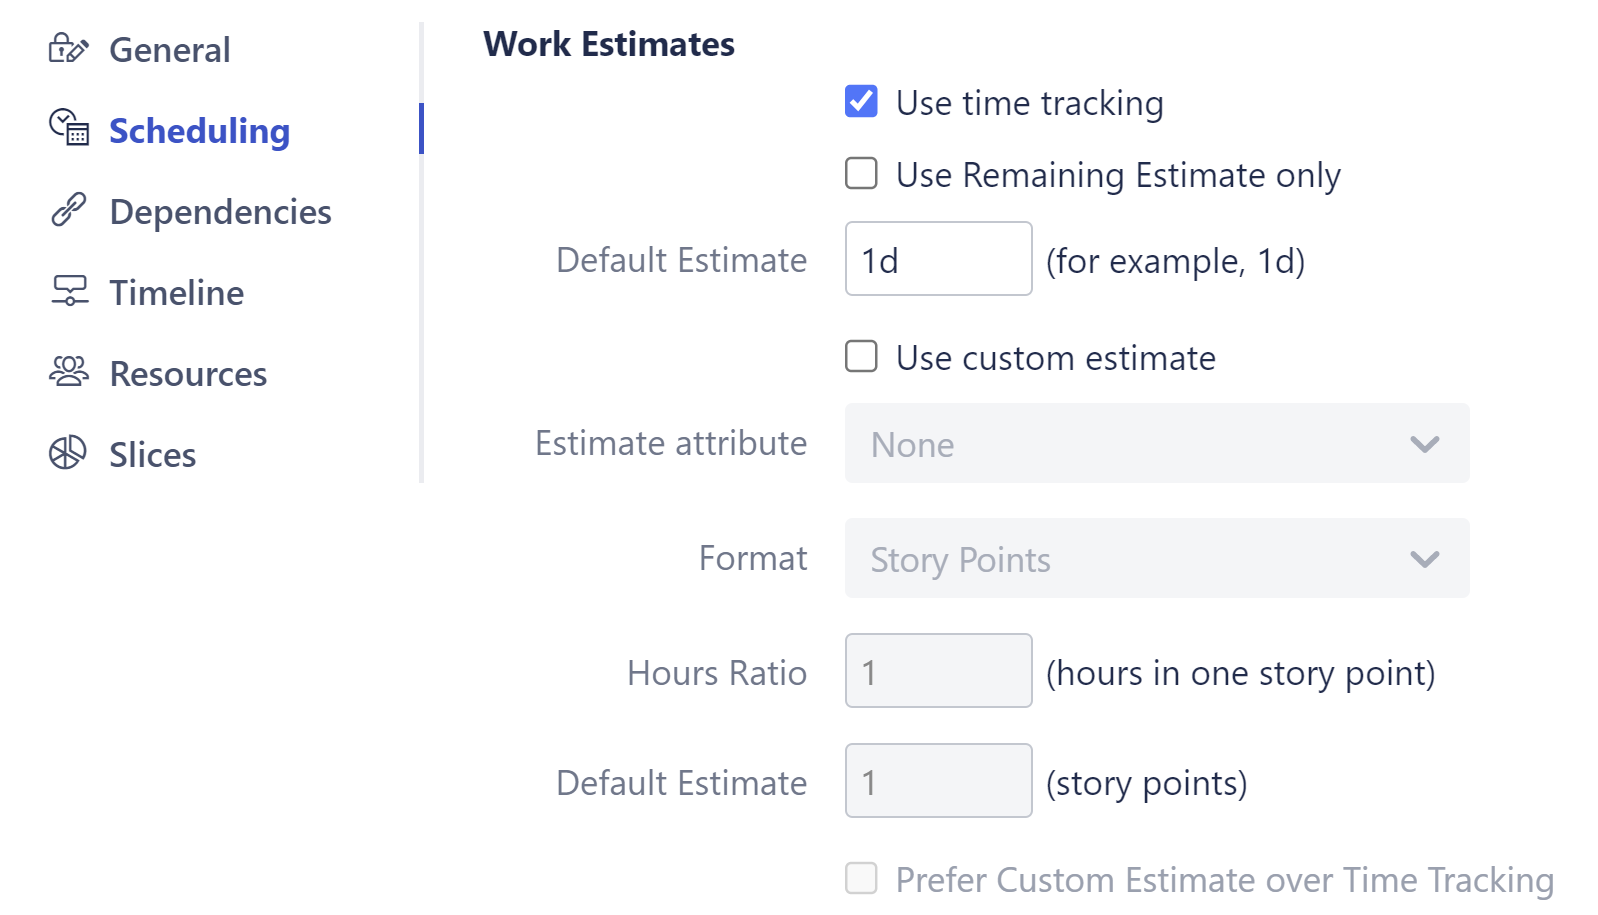 Configure work estimates